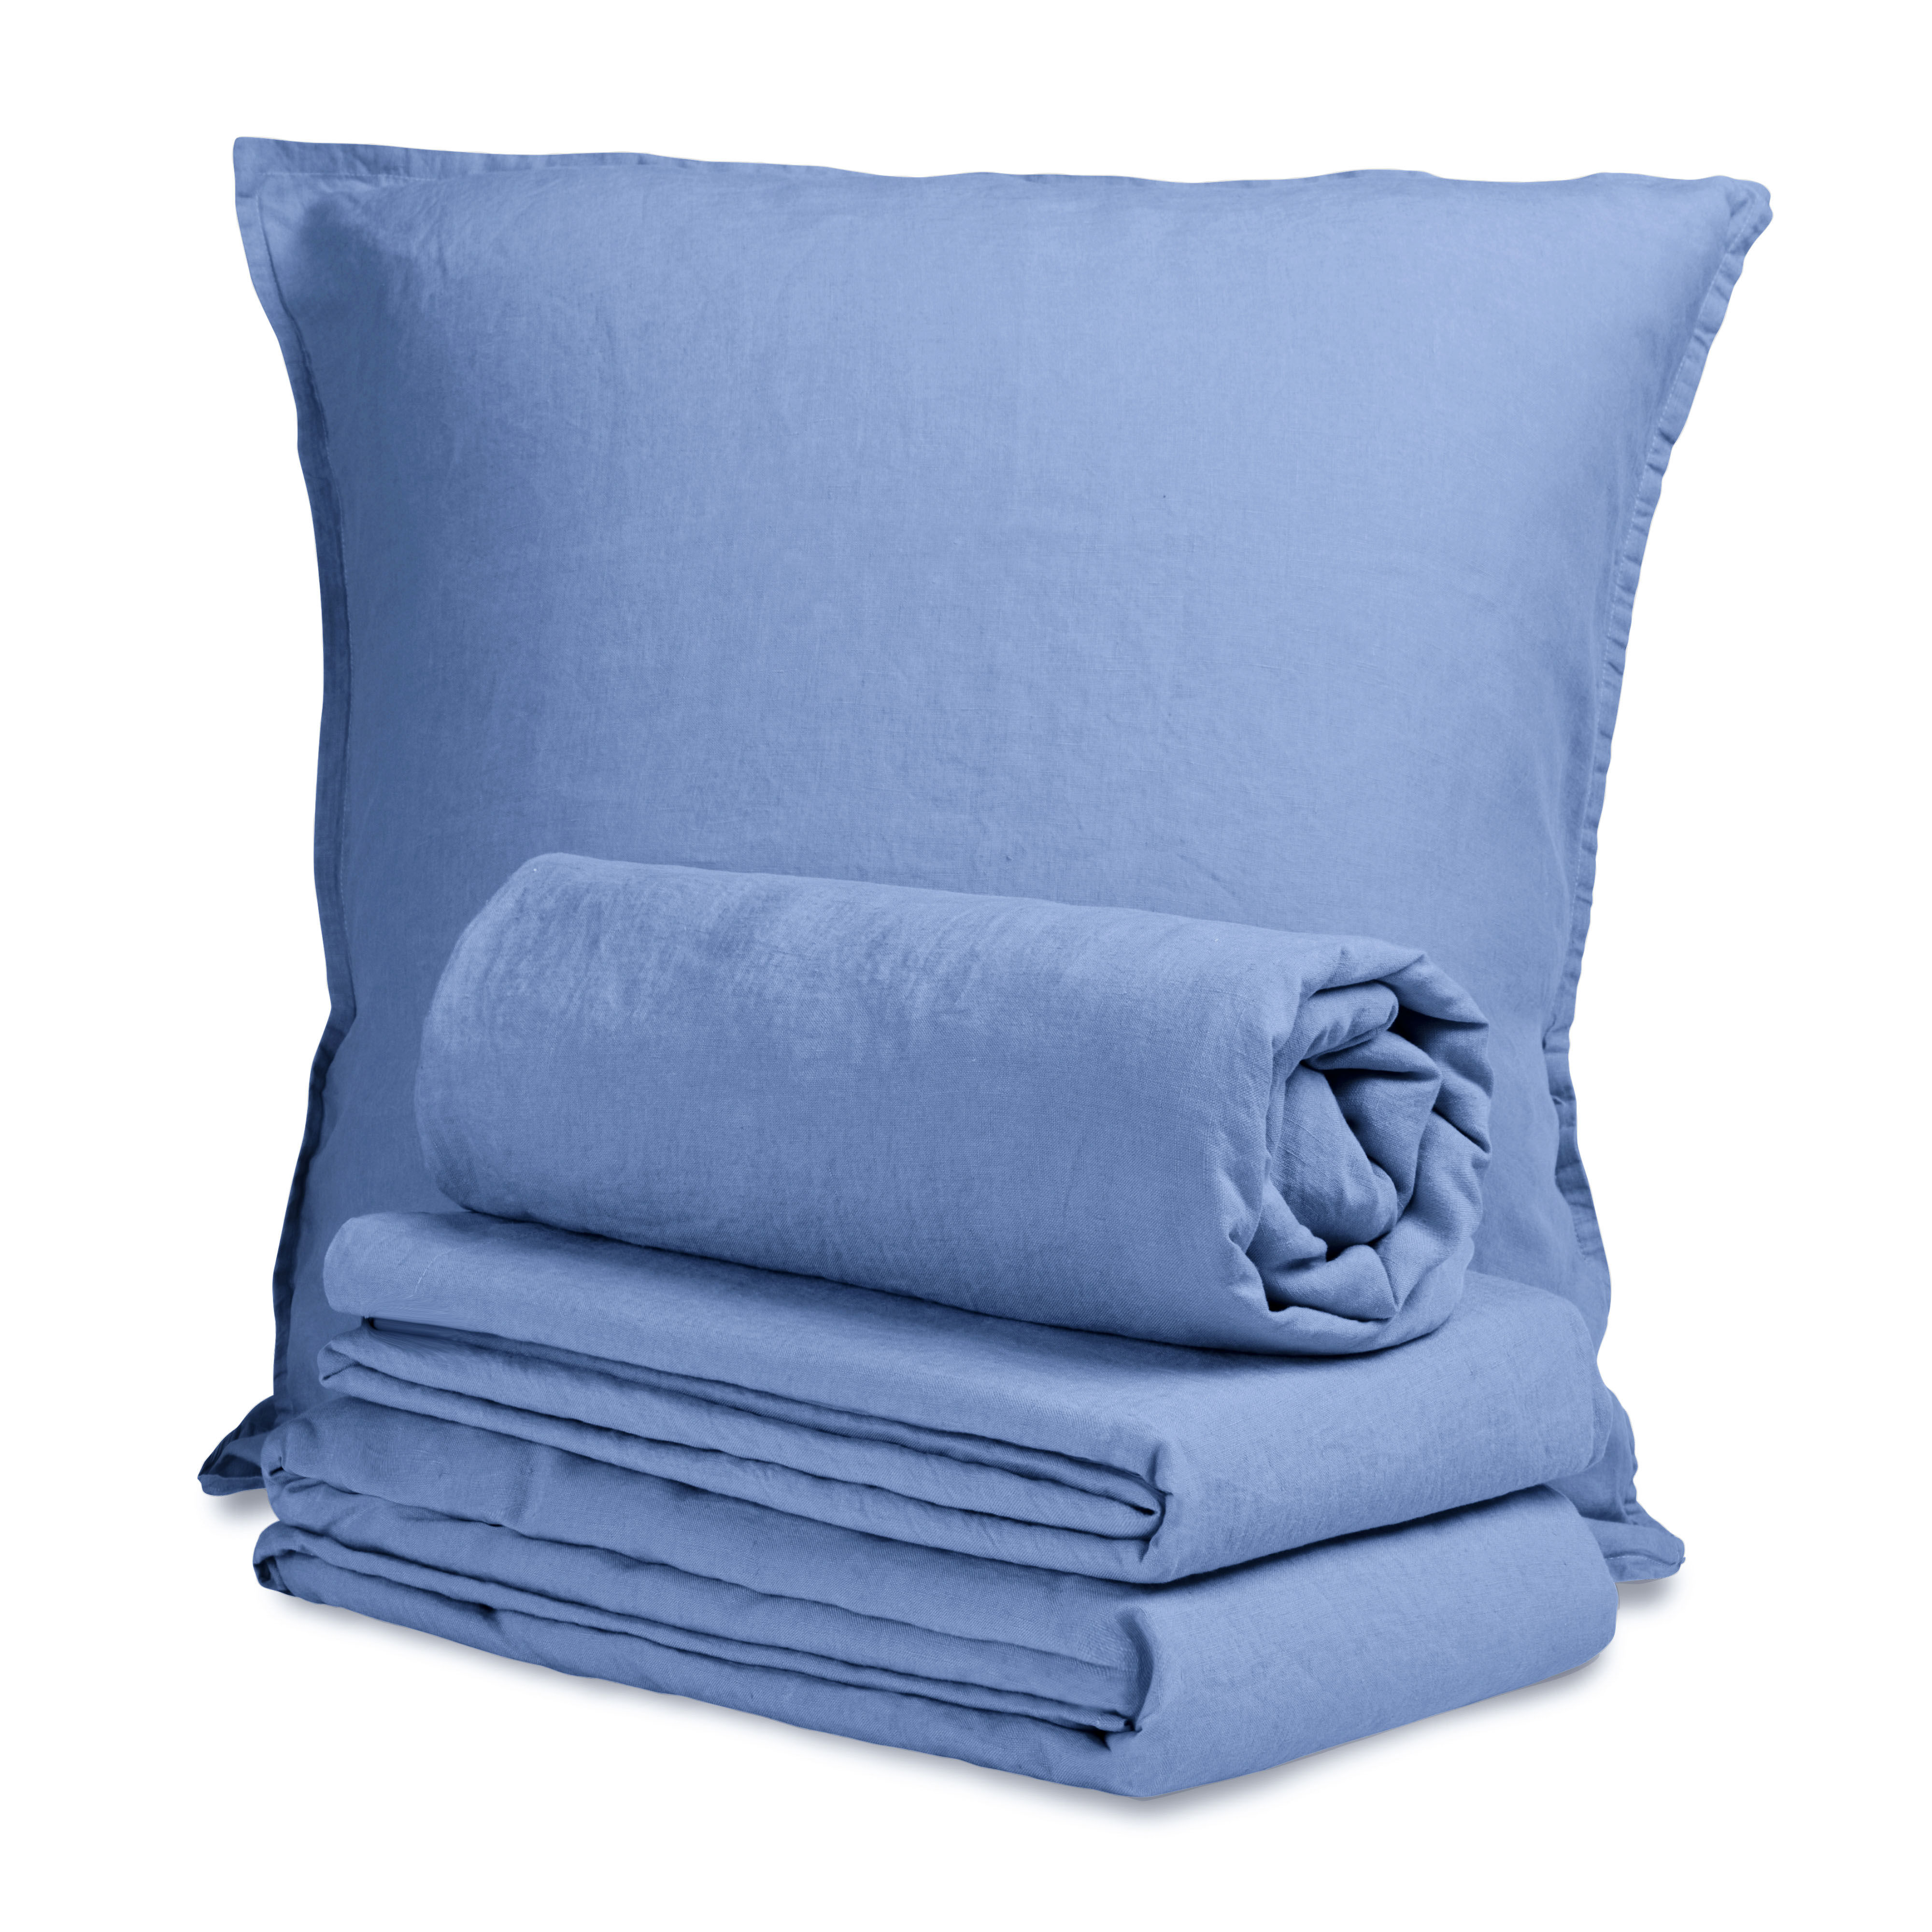 Drap-housse en coton 400 fils, 190 x 200 - 200 x 200 cm, bleu